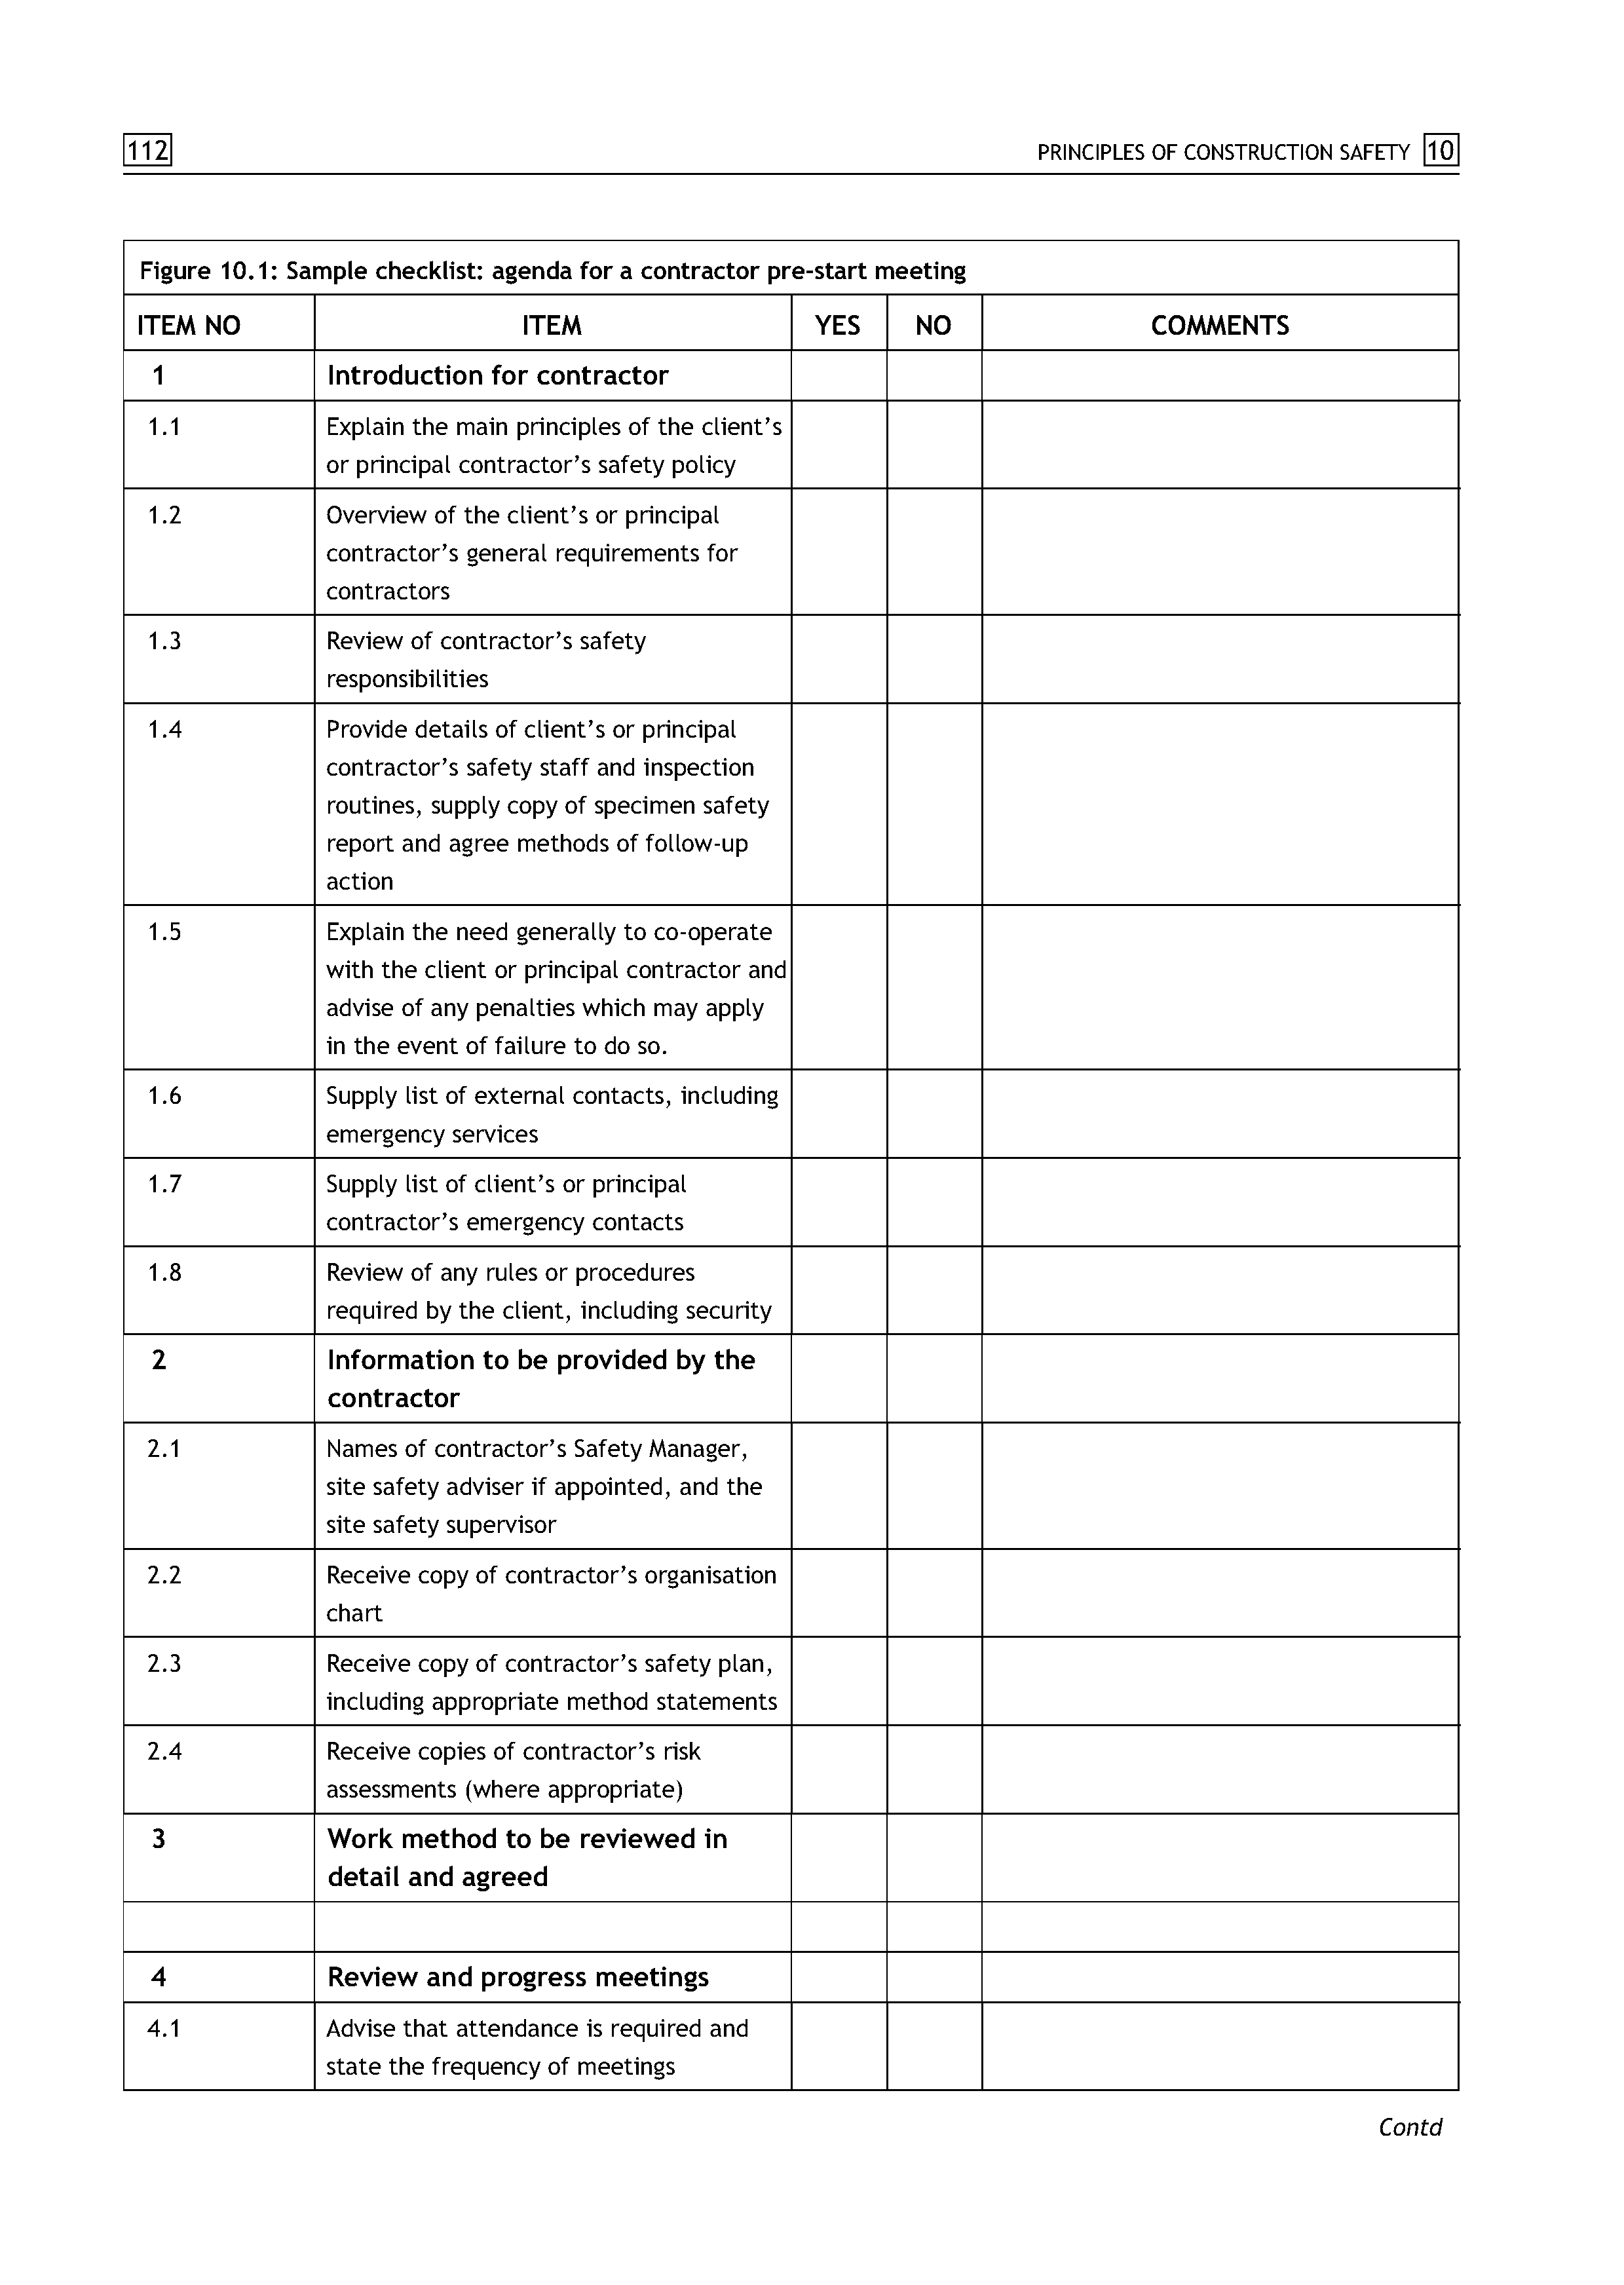 Figure 10.1 Sample checklist agenda for a contractor pre-start meeting ...